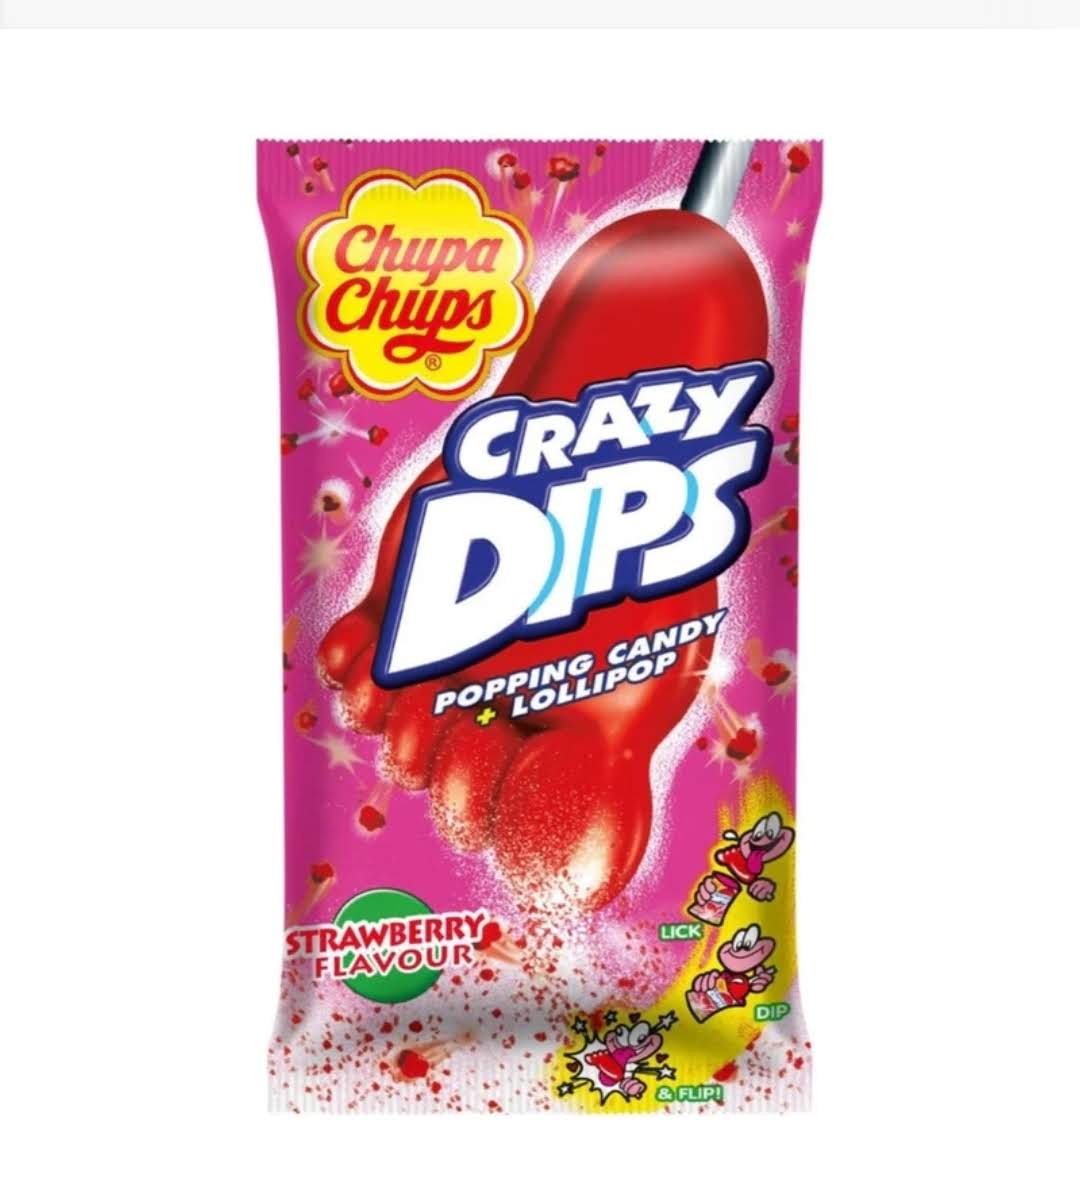 Chupa chups Crazy Dips